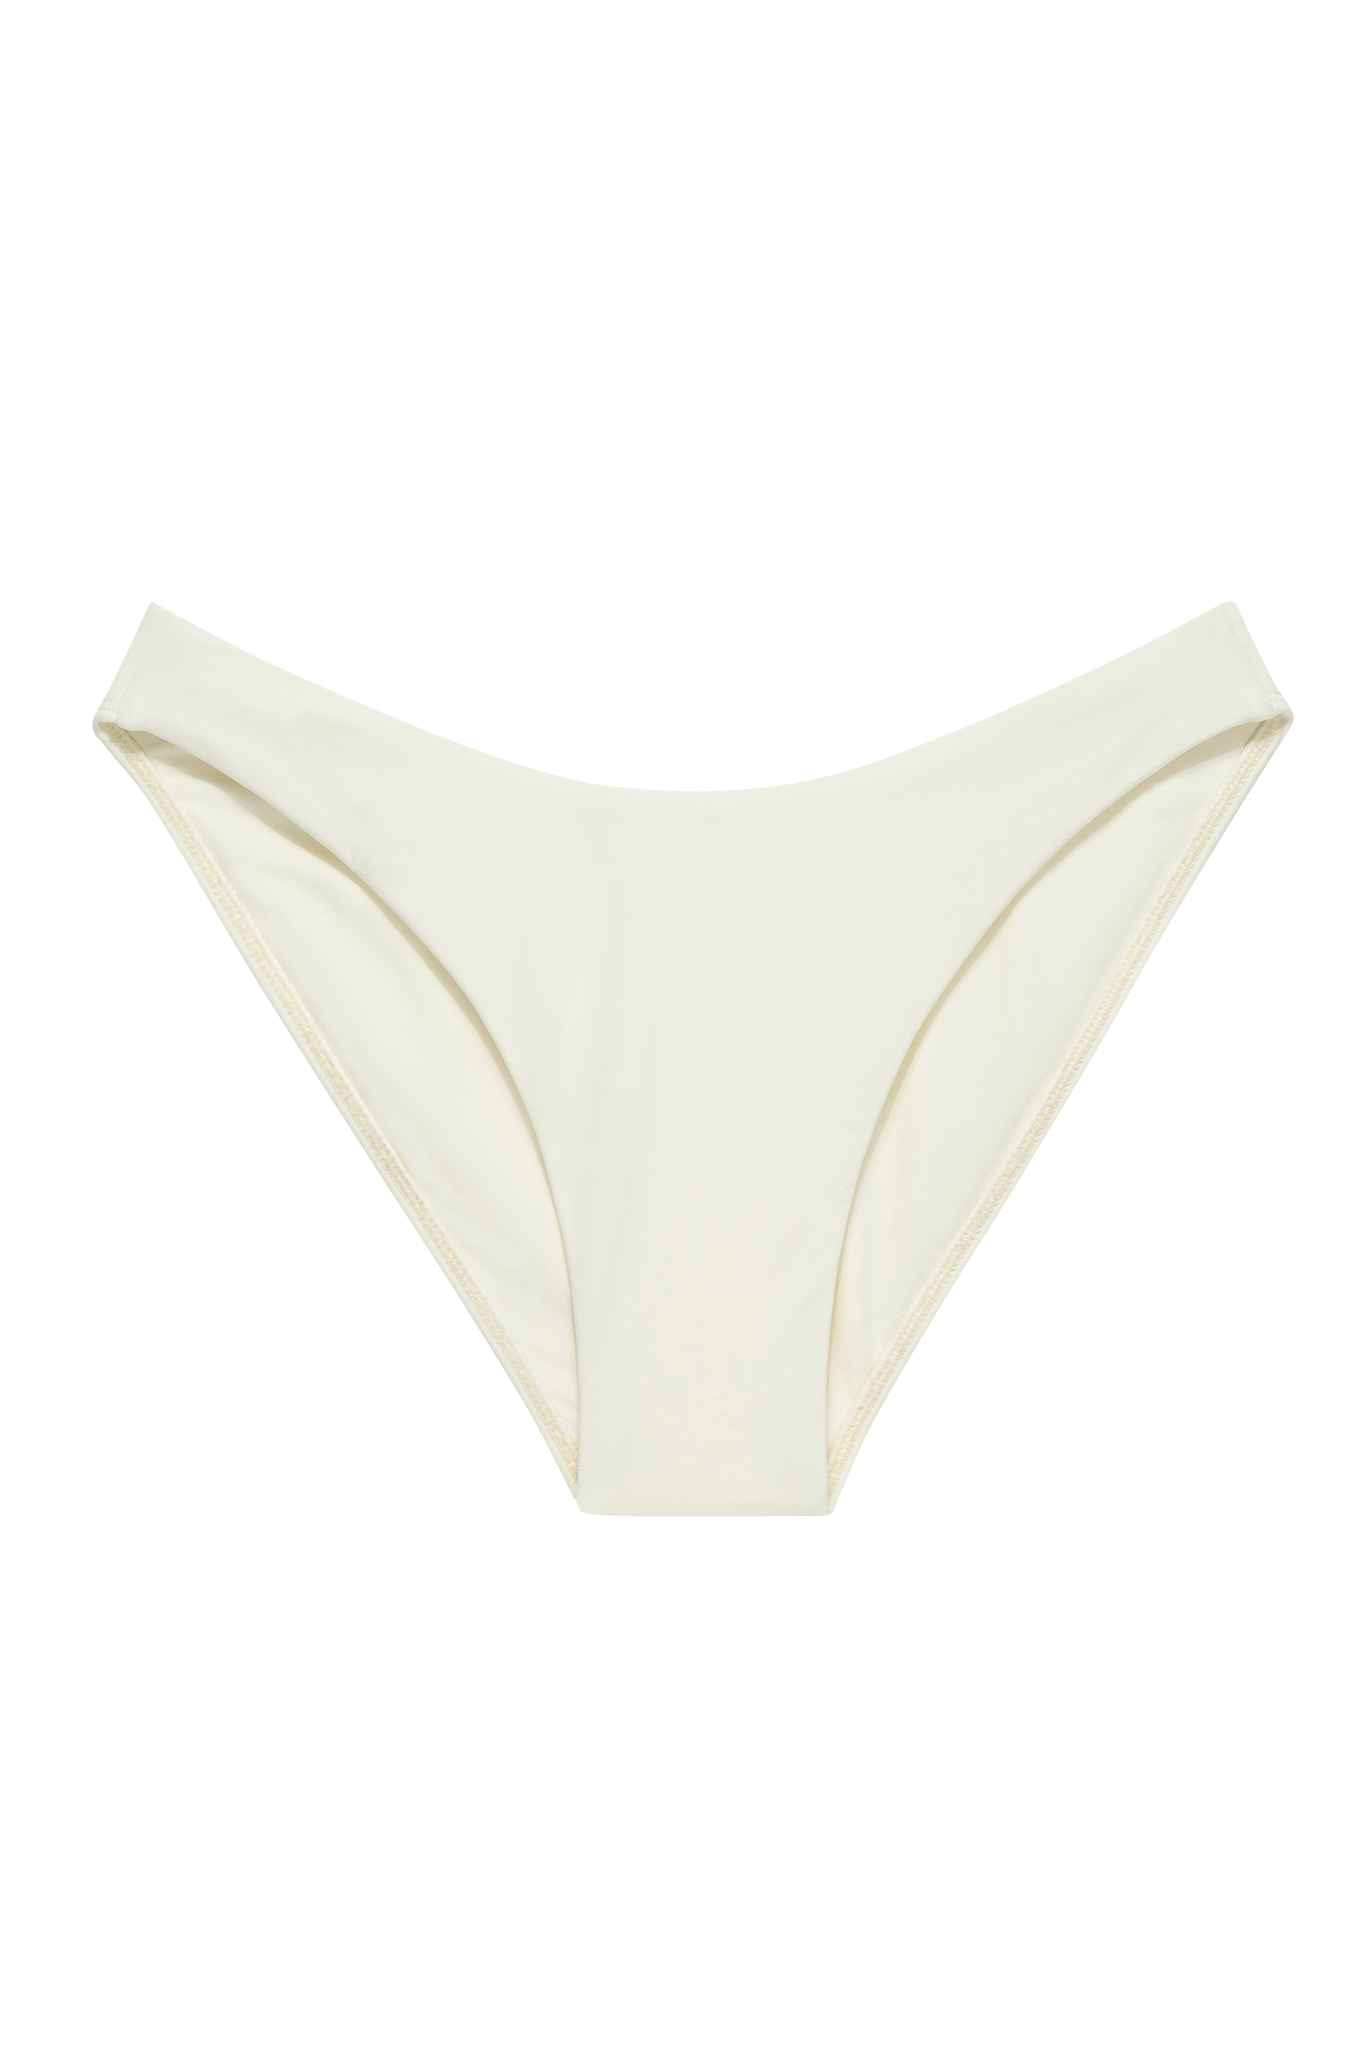 Clovelly Top - Ivory – Monday Swimwear